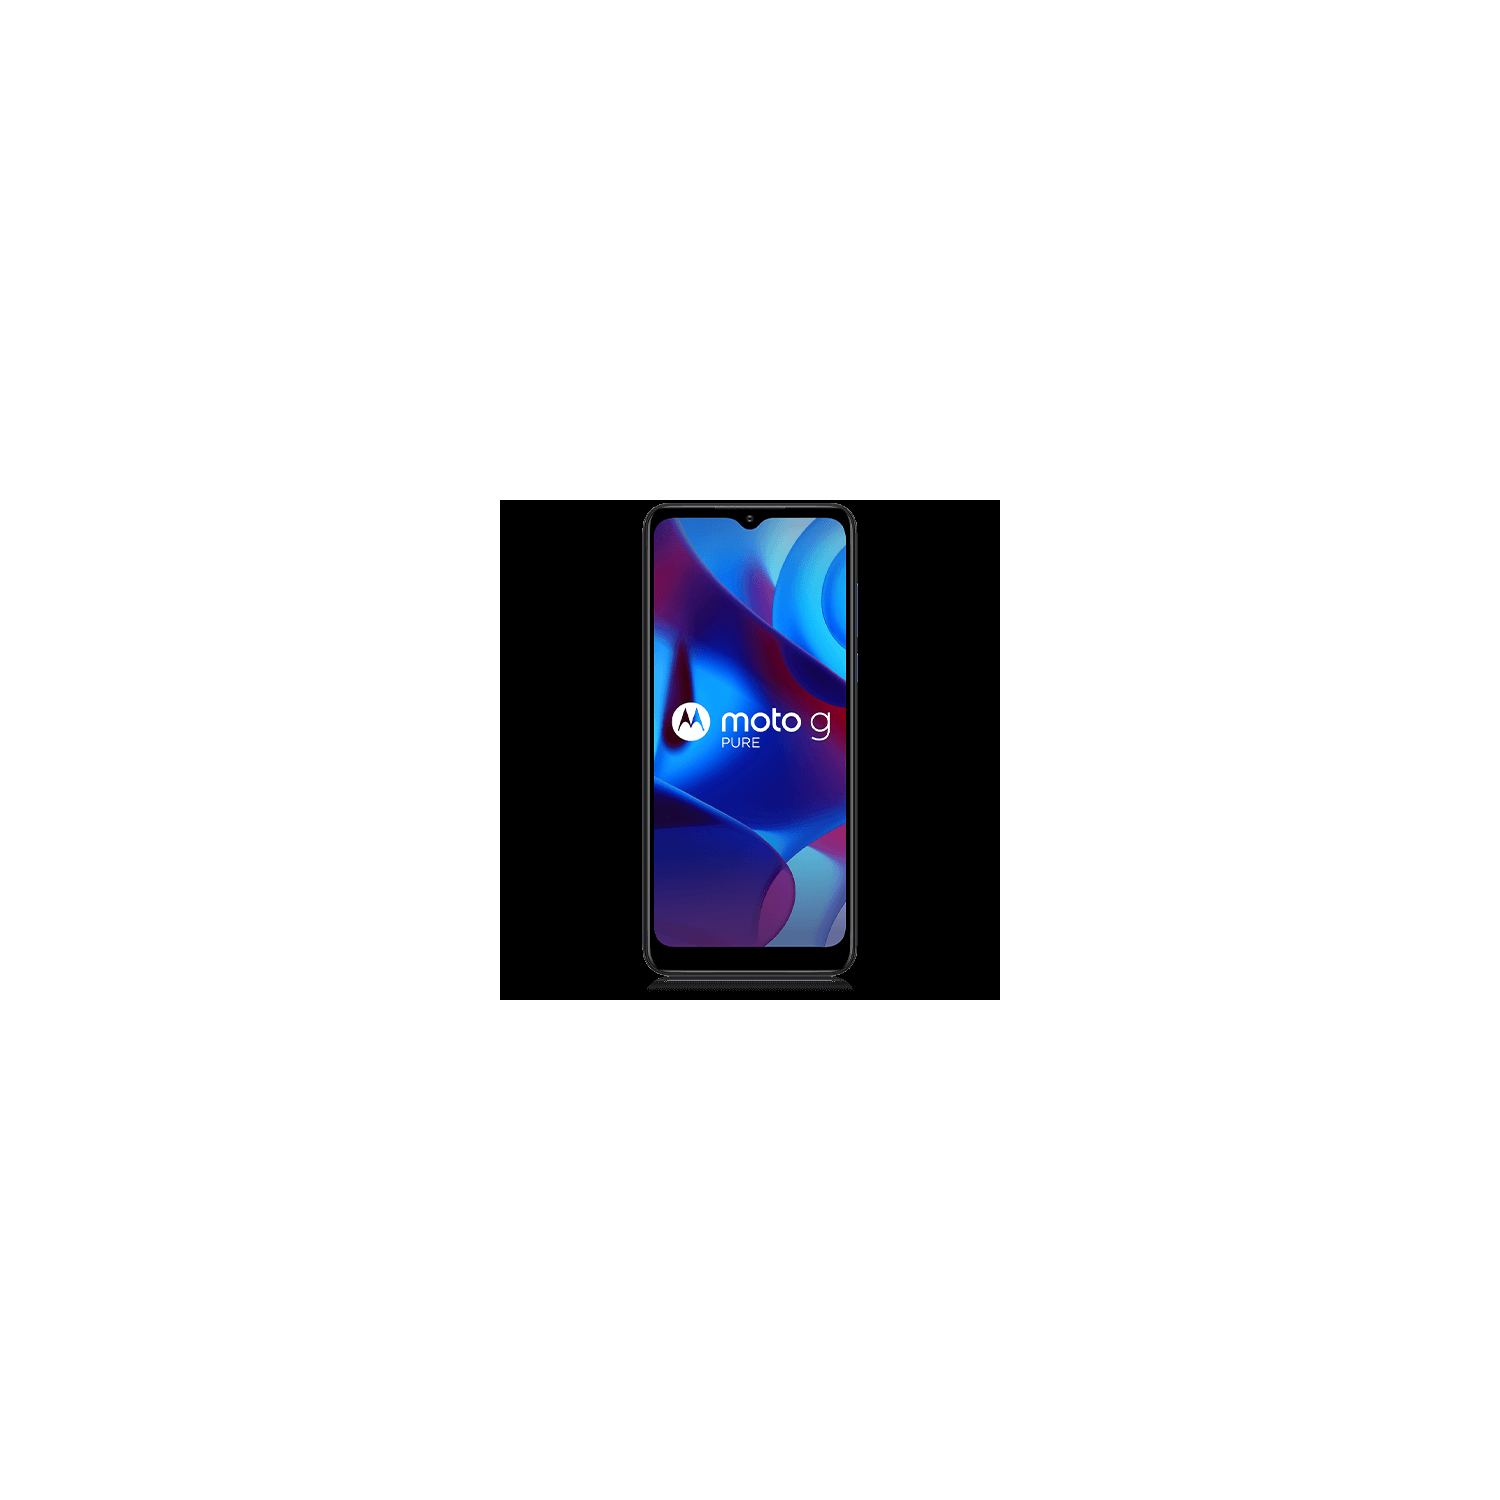 Motorola G Pure 32GB - Deep Indigo